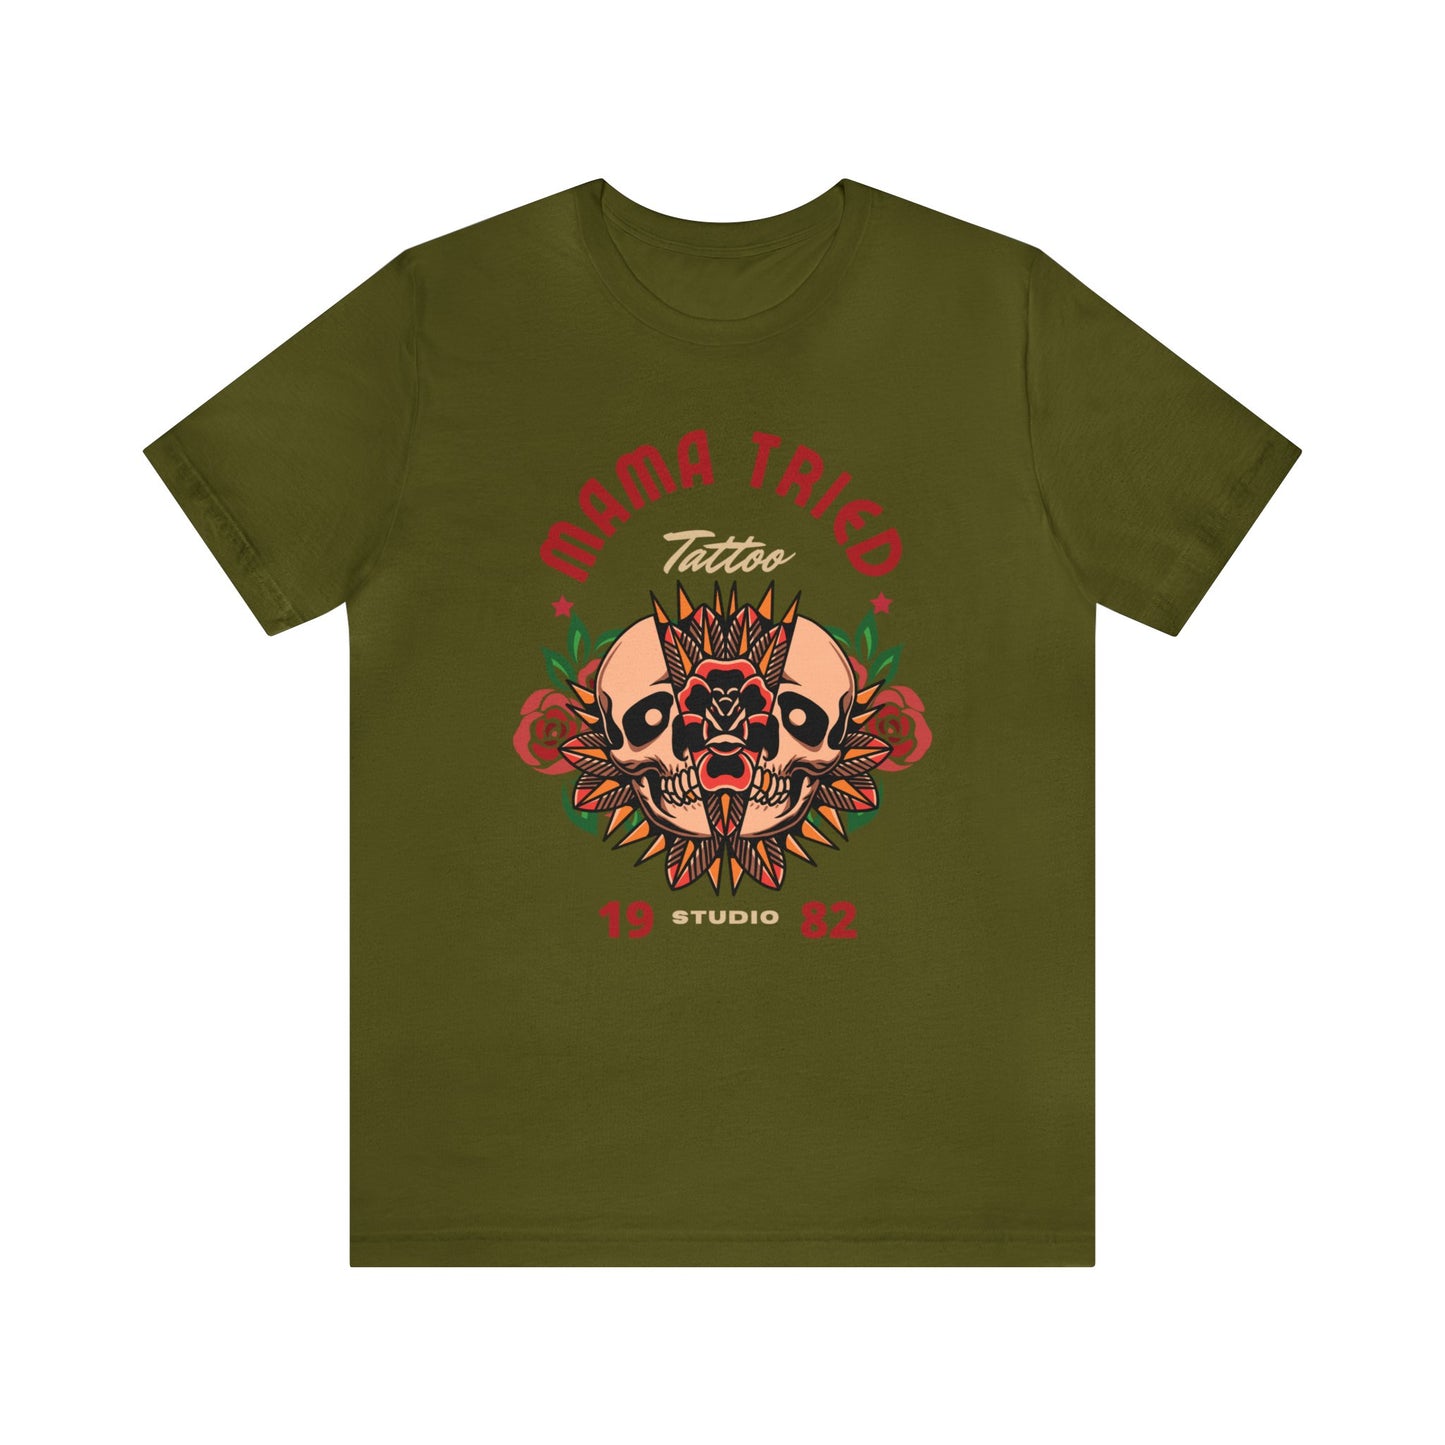 Mama Tried Tattoo T-shirt / Traditional Tattoo Tee Shirt / Punk Rock Clothing Tshirt Rockabilly Psychobilly Freak Goth - Foxlark Crystal Jewelry